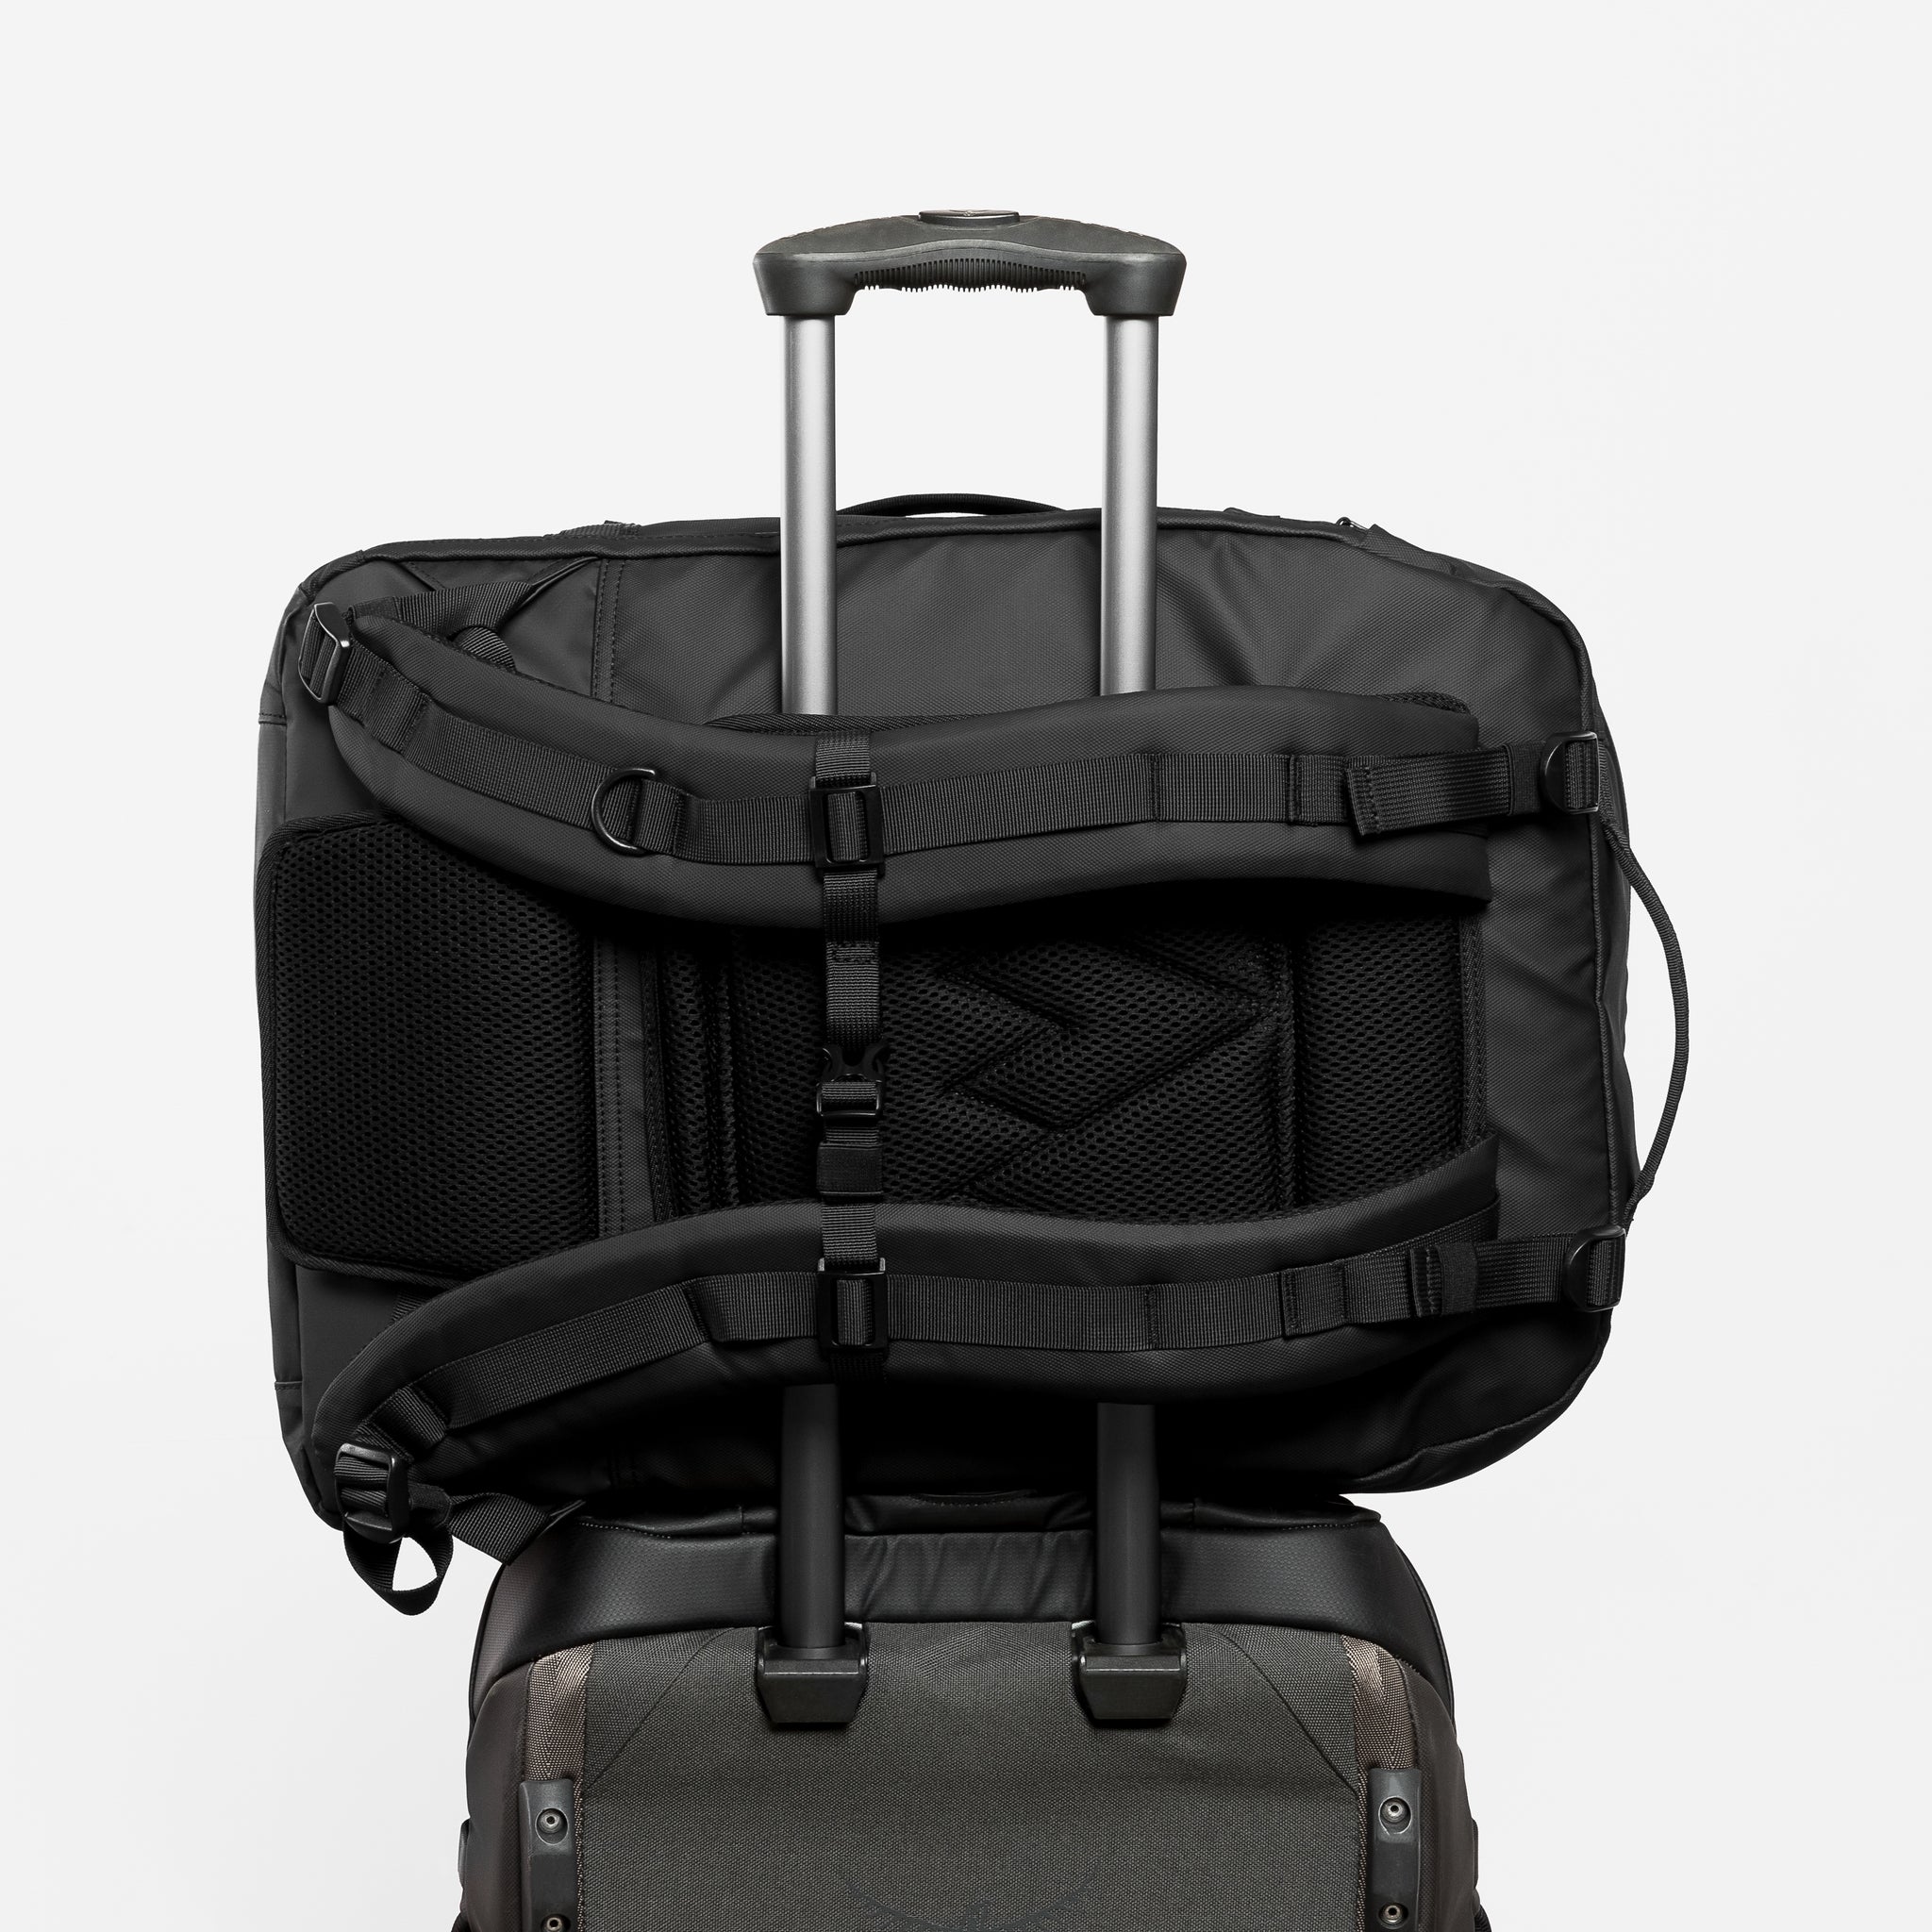 An Urban Green Adventure bag trolley sleeve on a suitcase